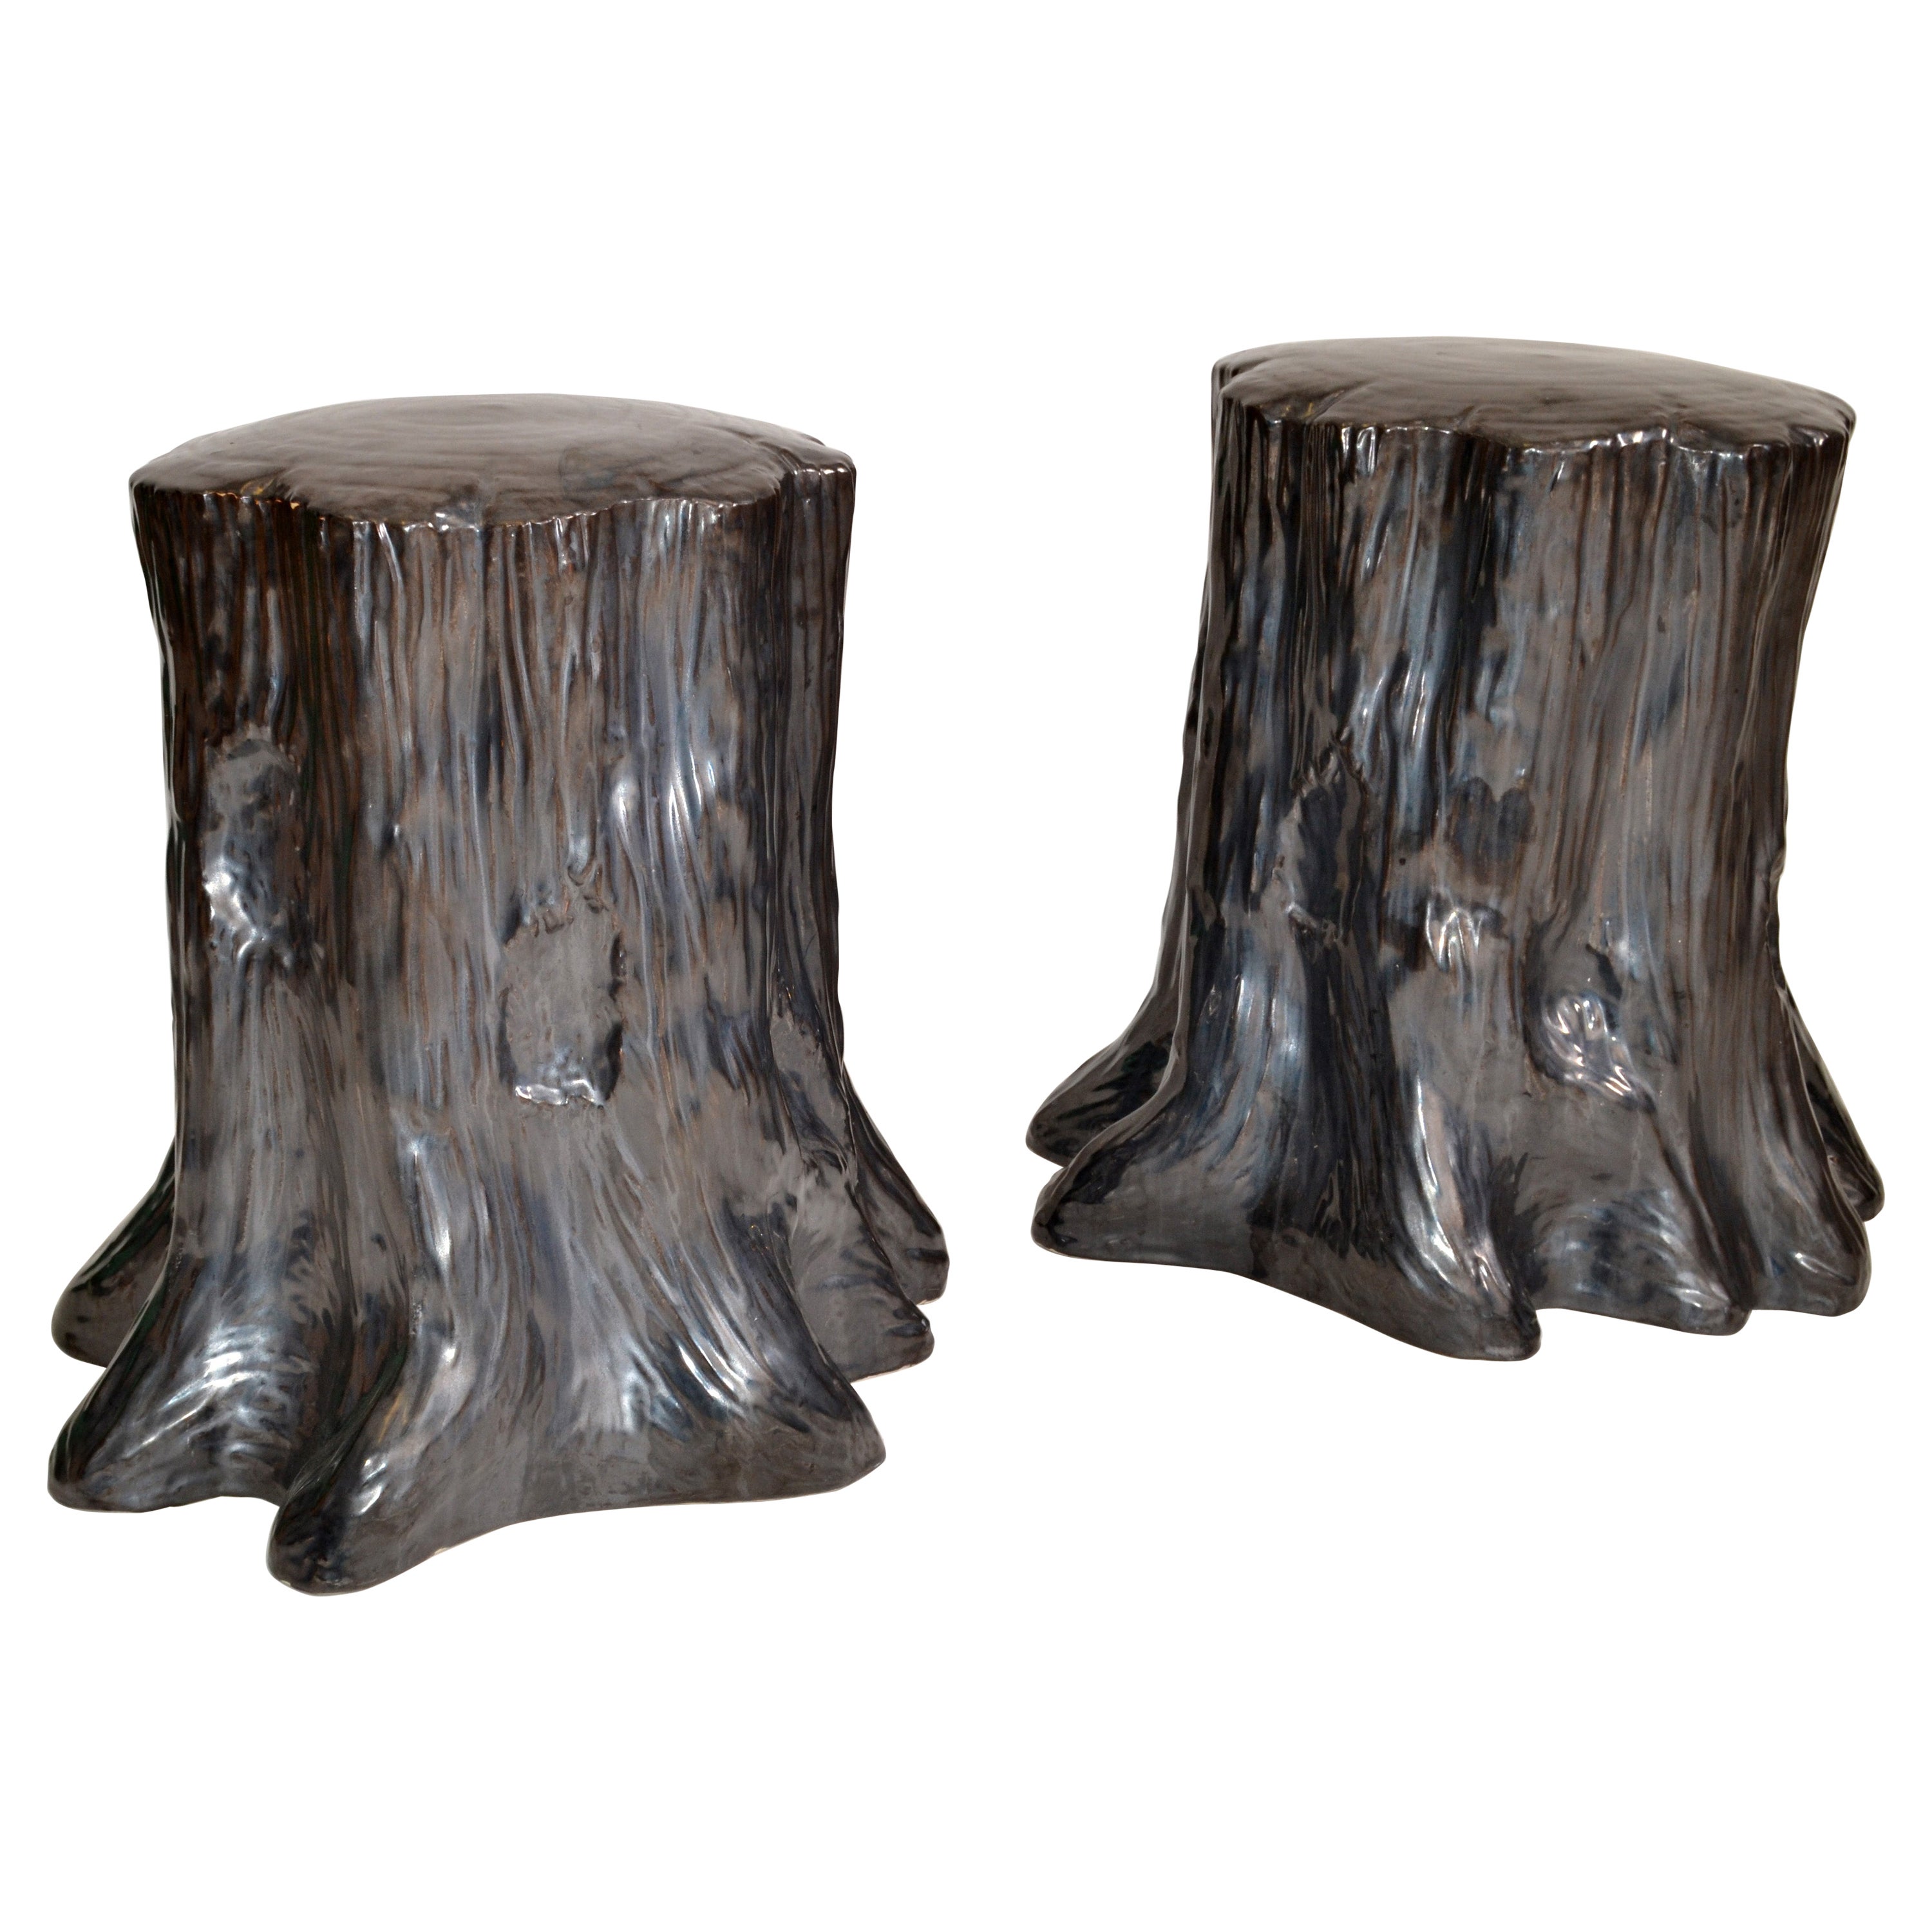 Hollywood Regency Style Outdoor Silver Ceramic Side Table Tree Stump Look, Pair